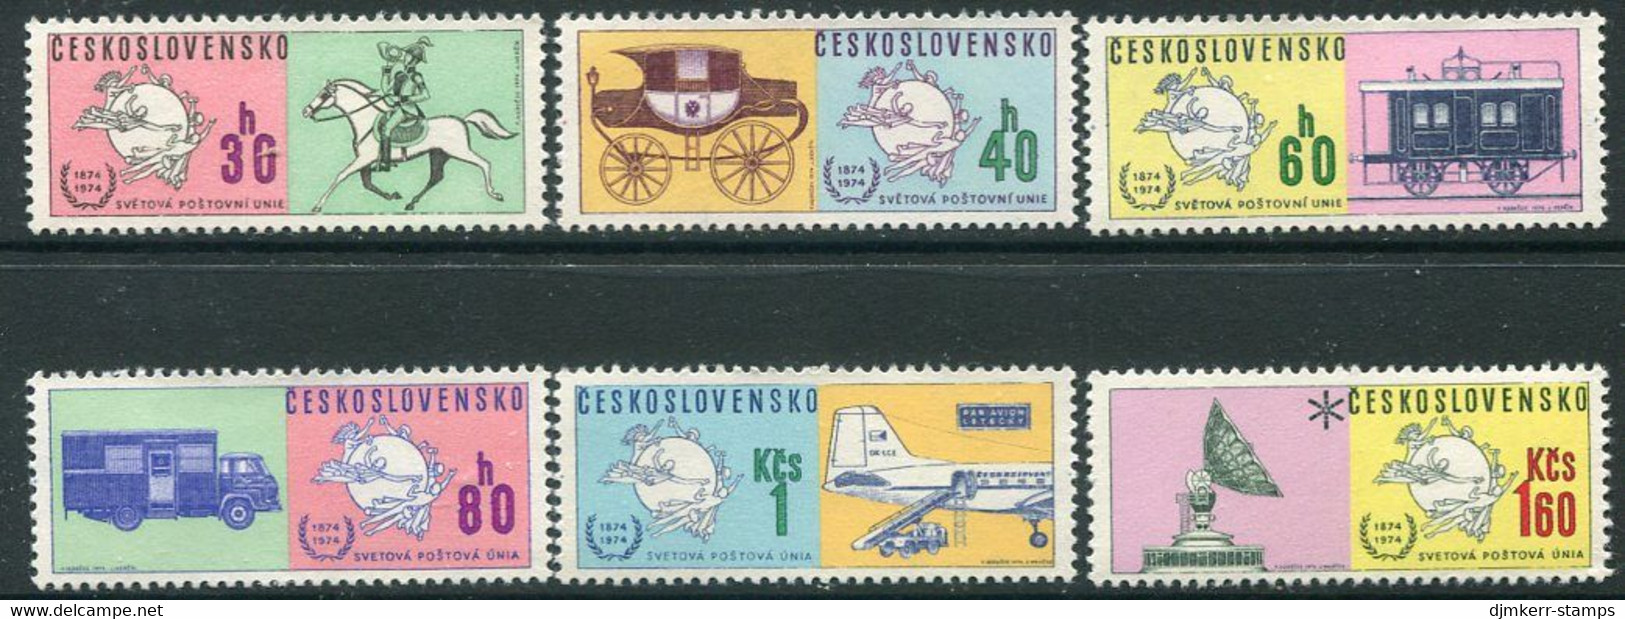 CZECHOSLOVAKIA 1974 Universal Postal Union MNH / **  Michel 2222-27 - Ongebruikt